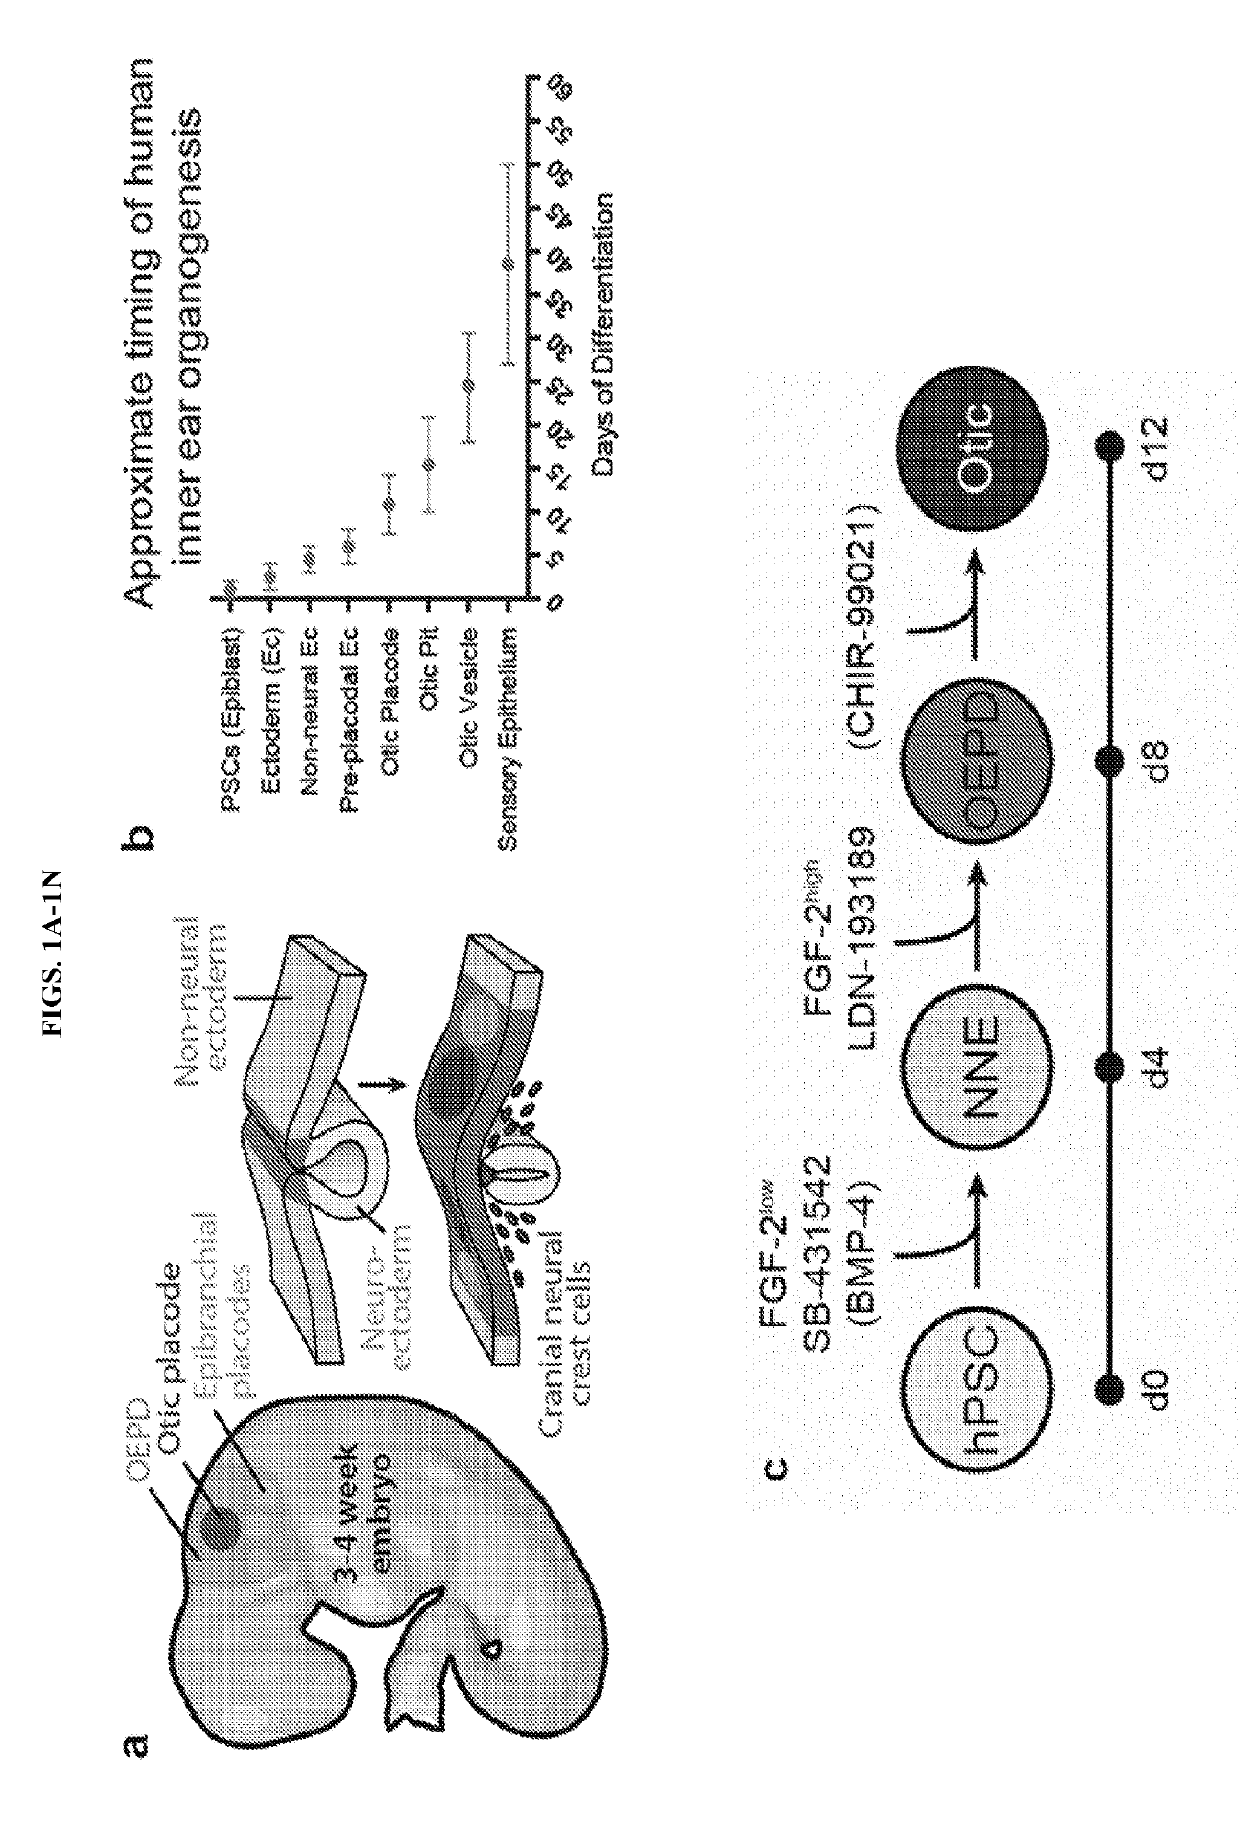 Methods of generating human inner ear sensory epithelia and sensory neurons